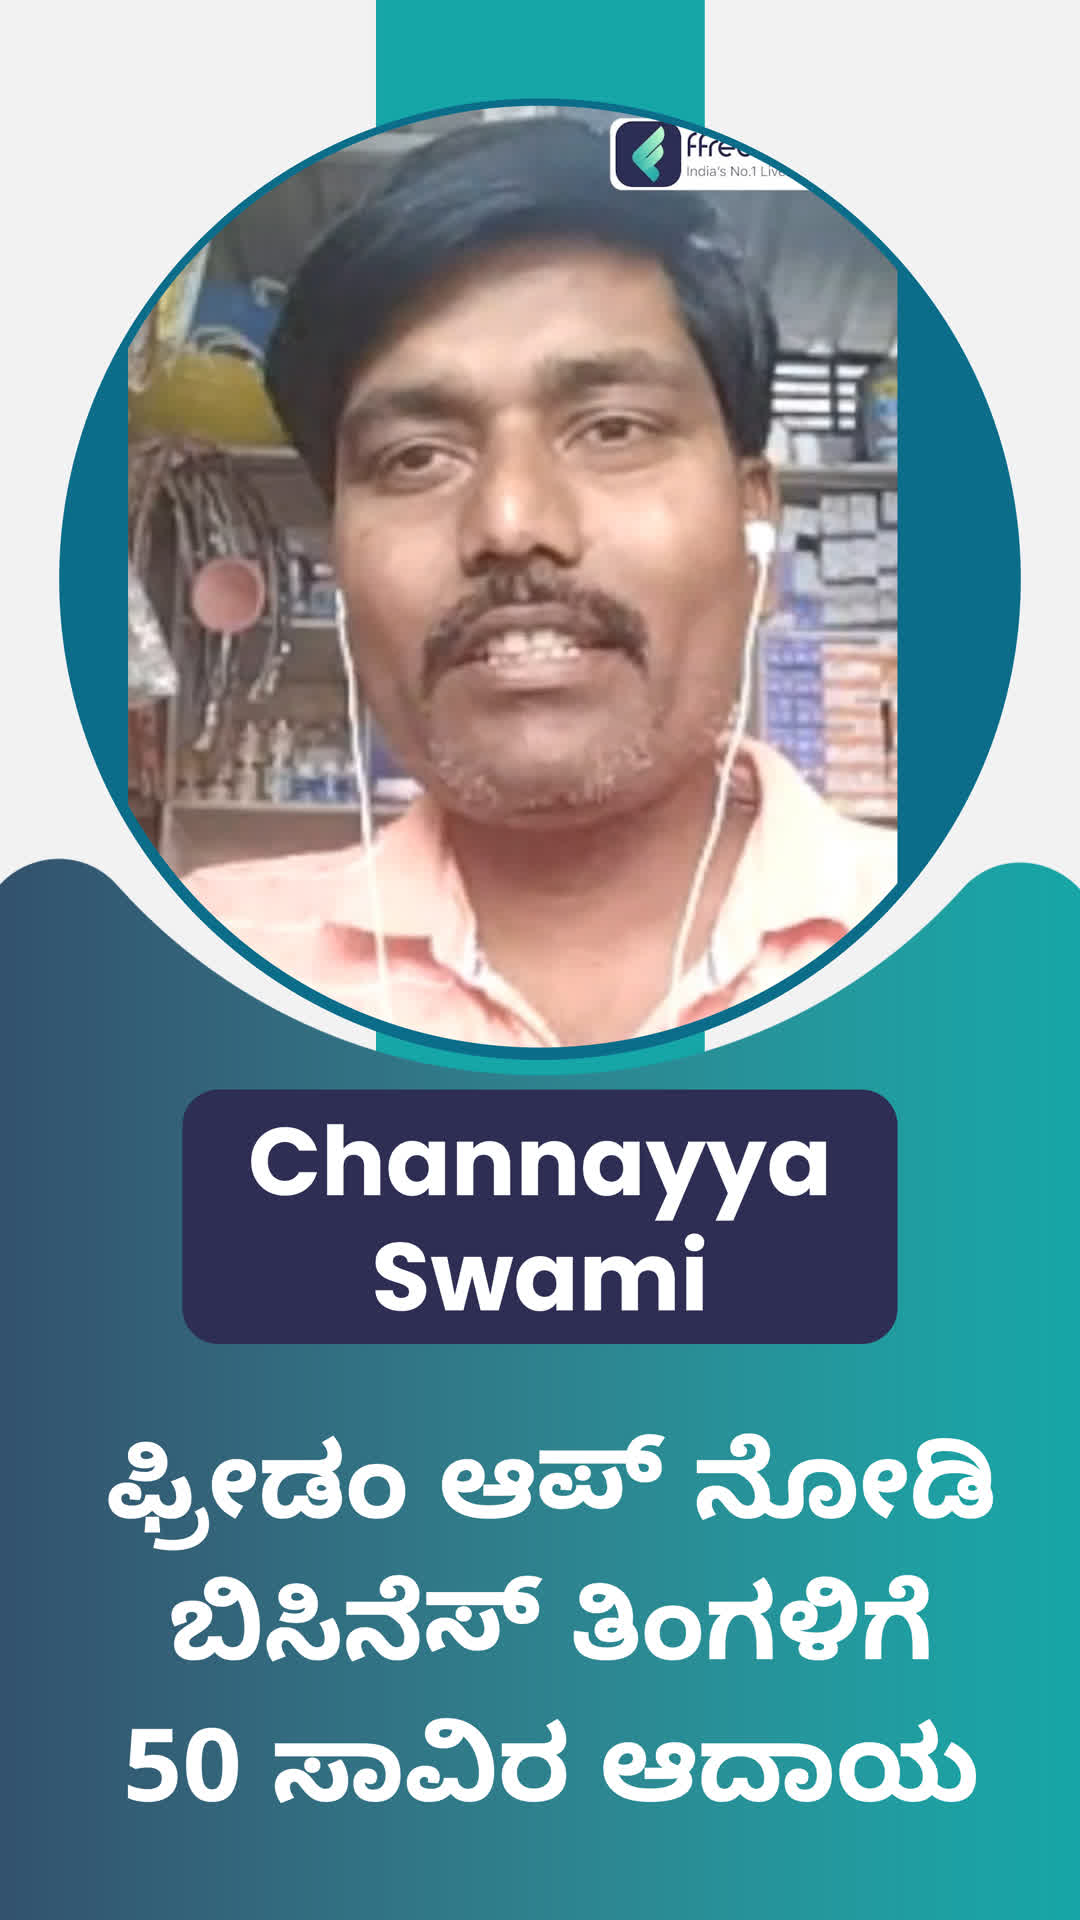 Channayya Swamy channayya Swamy's Honest Review of ffreedom app - Raichur ,Karnataka